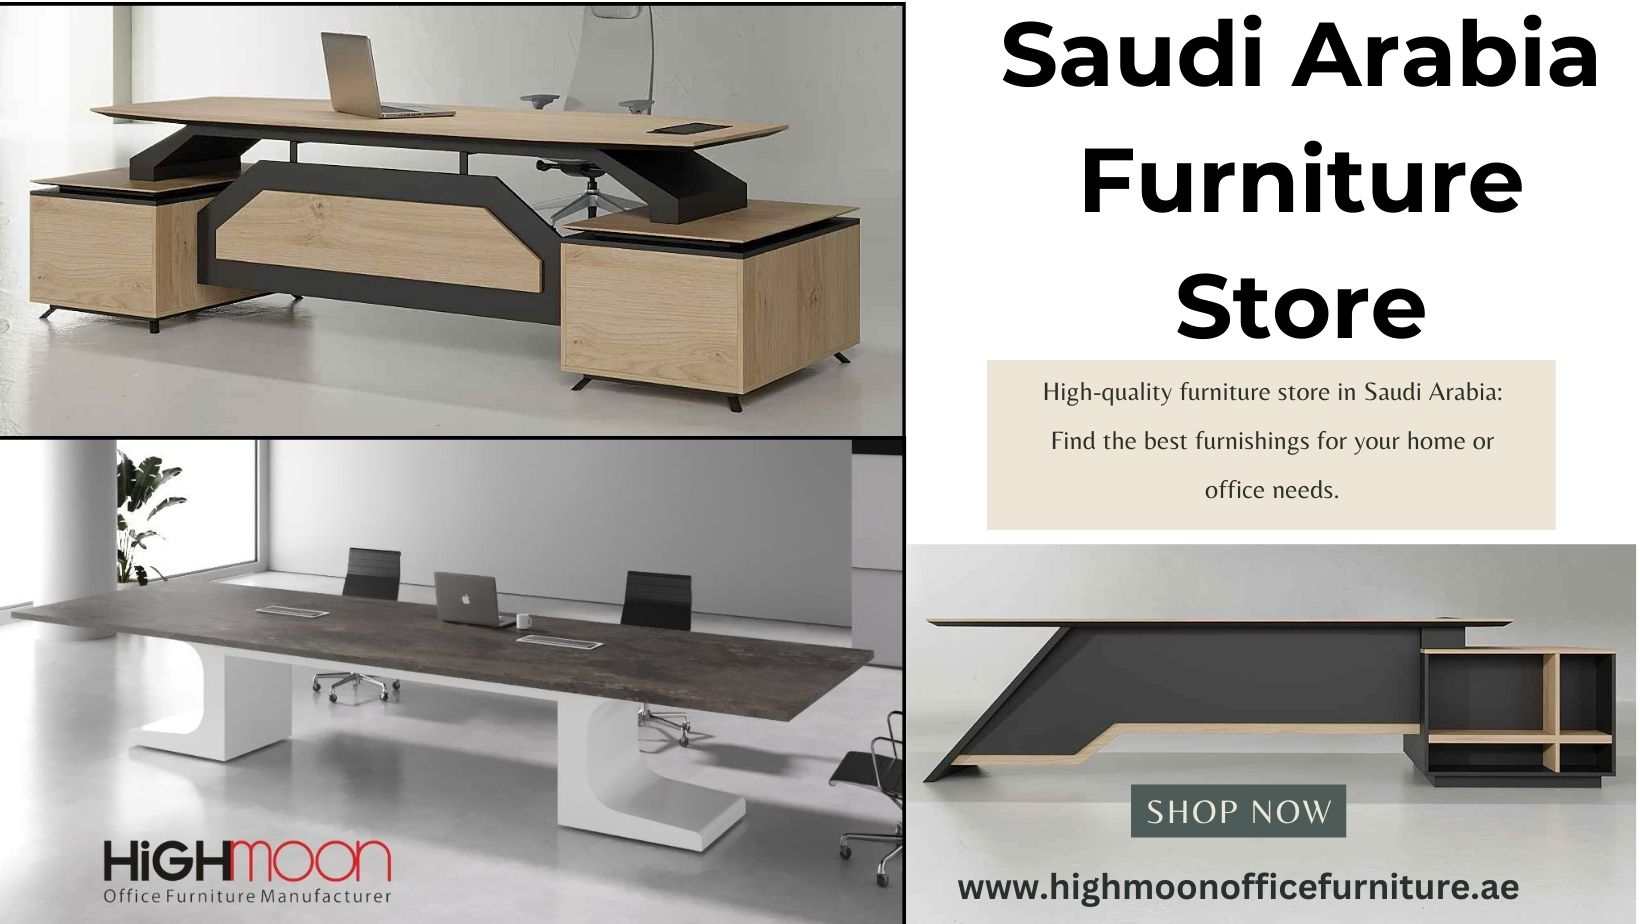 Saudi Arabia Furniture Store